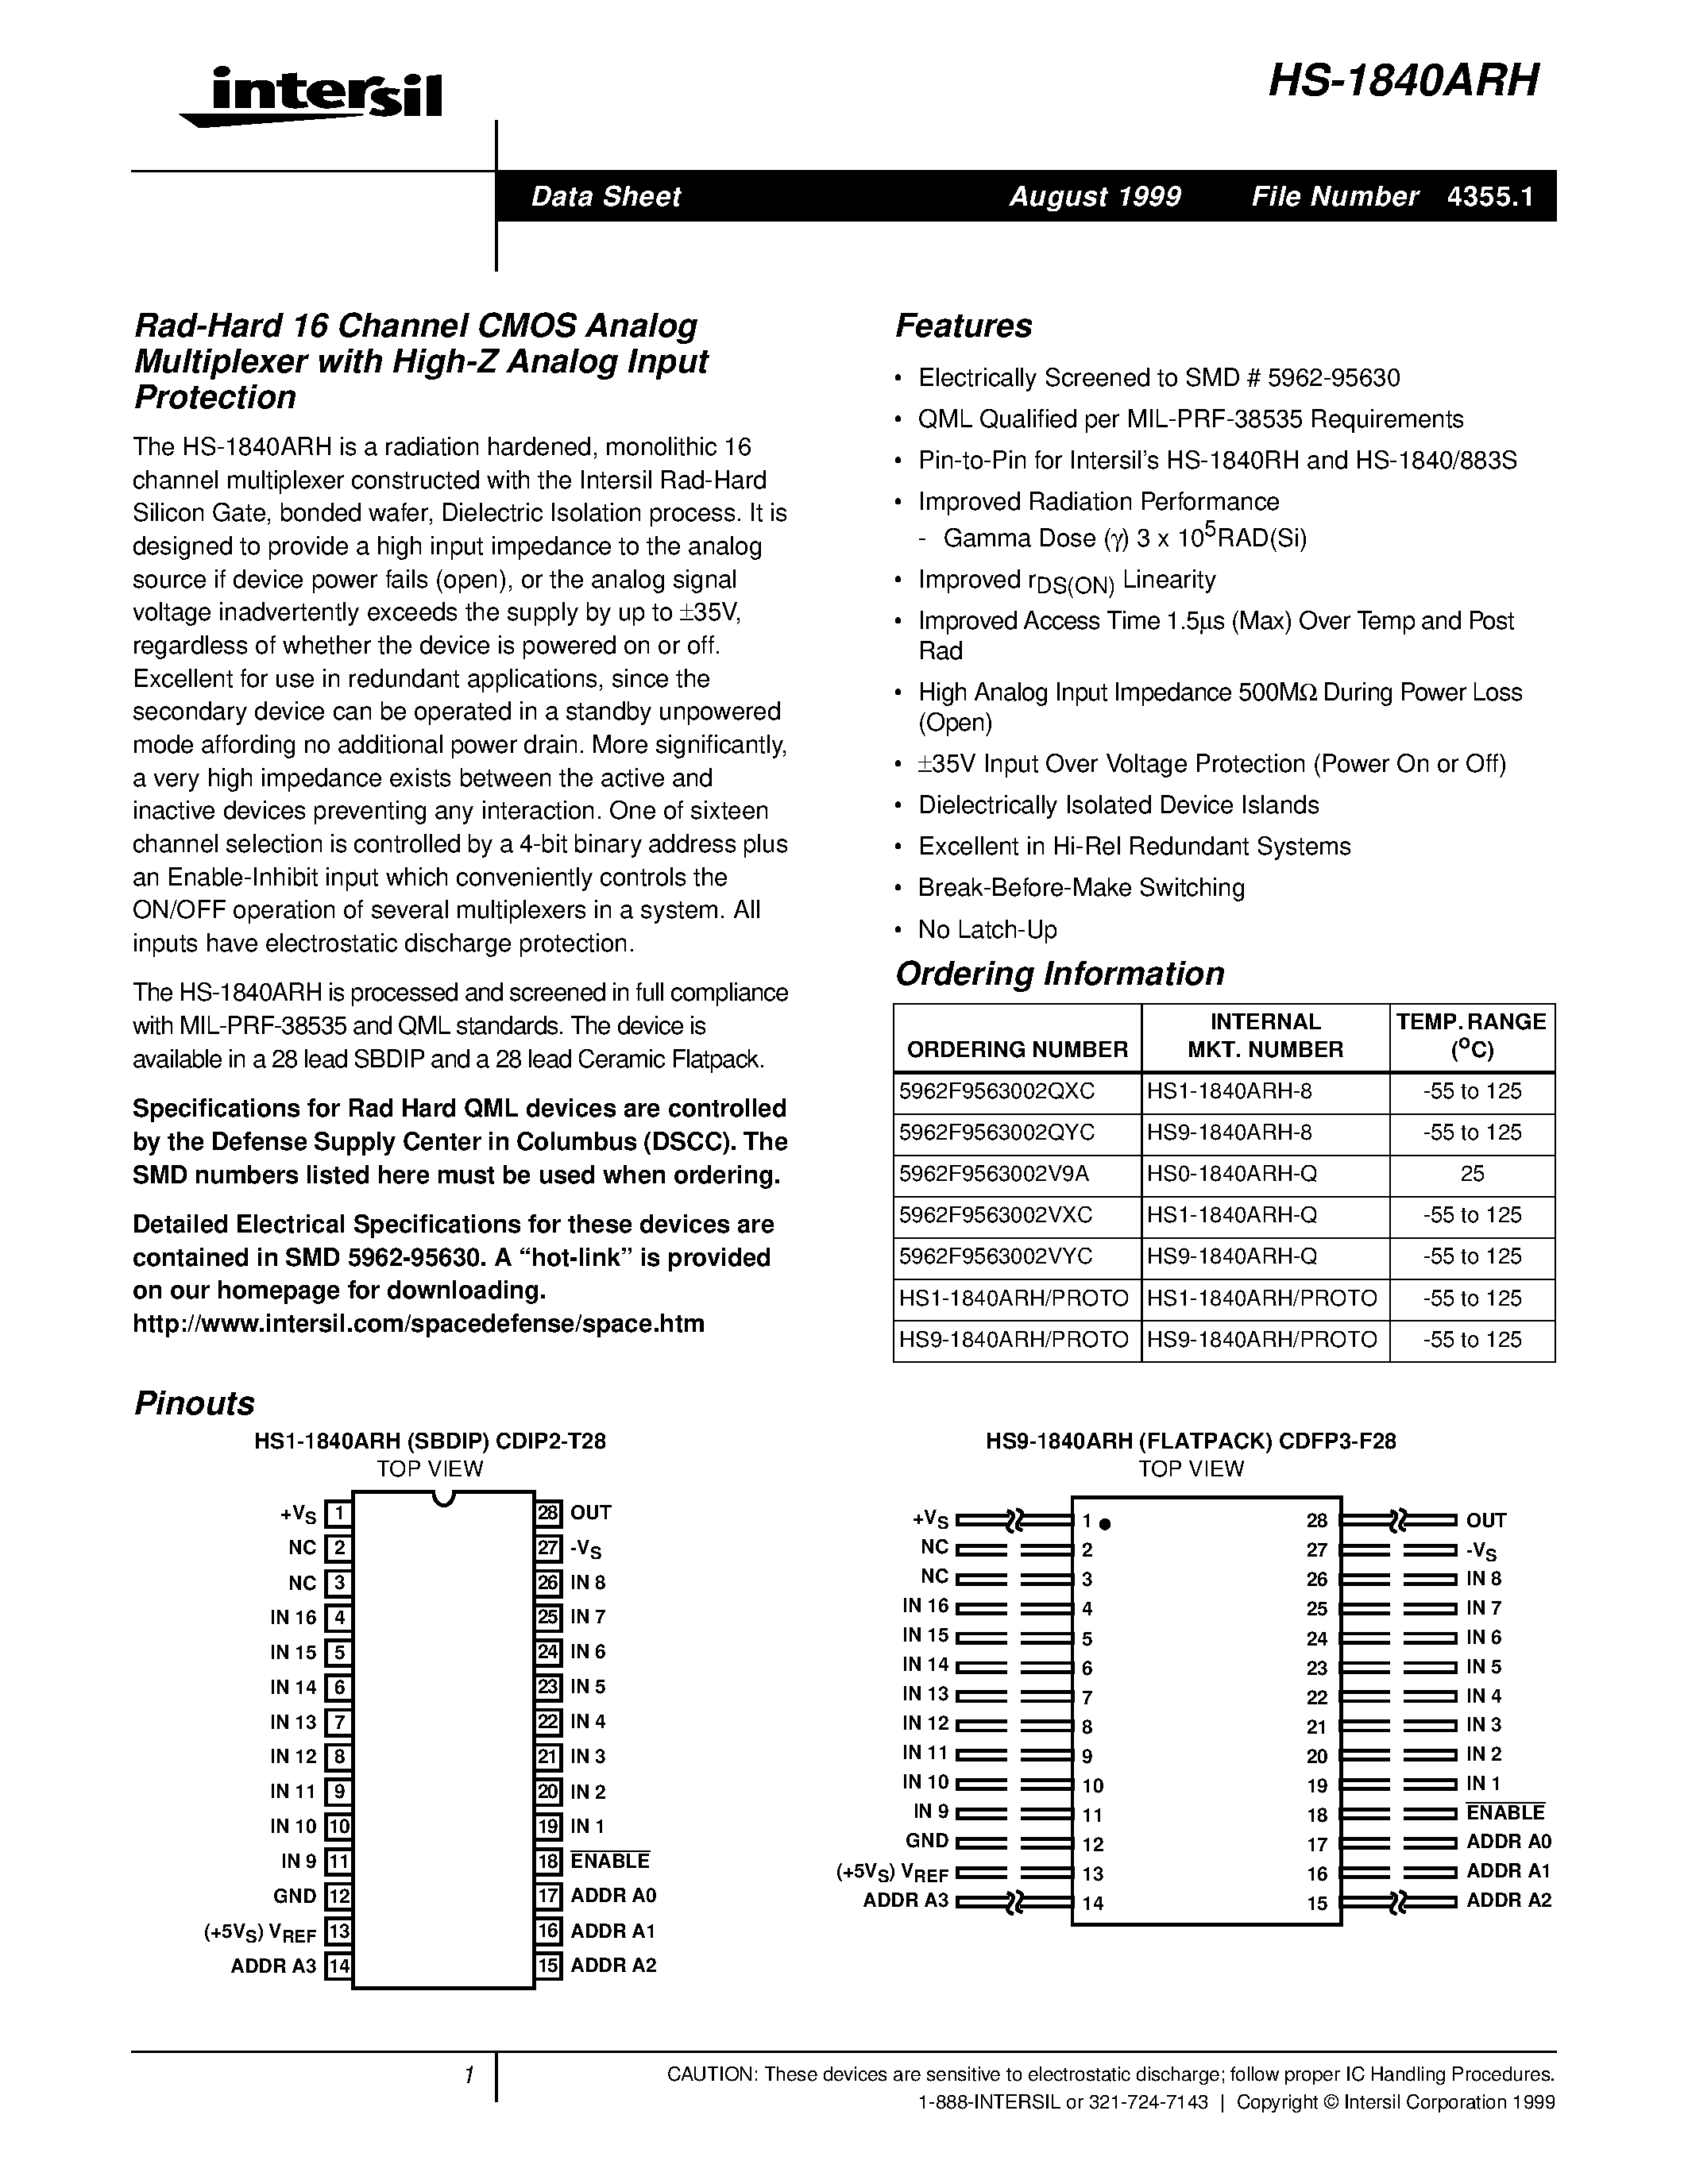 Даташит HS1-1840ARH-Q-Rad-Hard 16 Channel CMOS Analog Multiplexer with High-Z Analog Input Protection страница 1